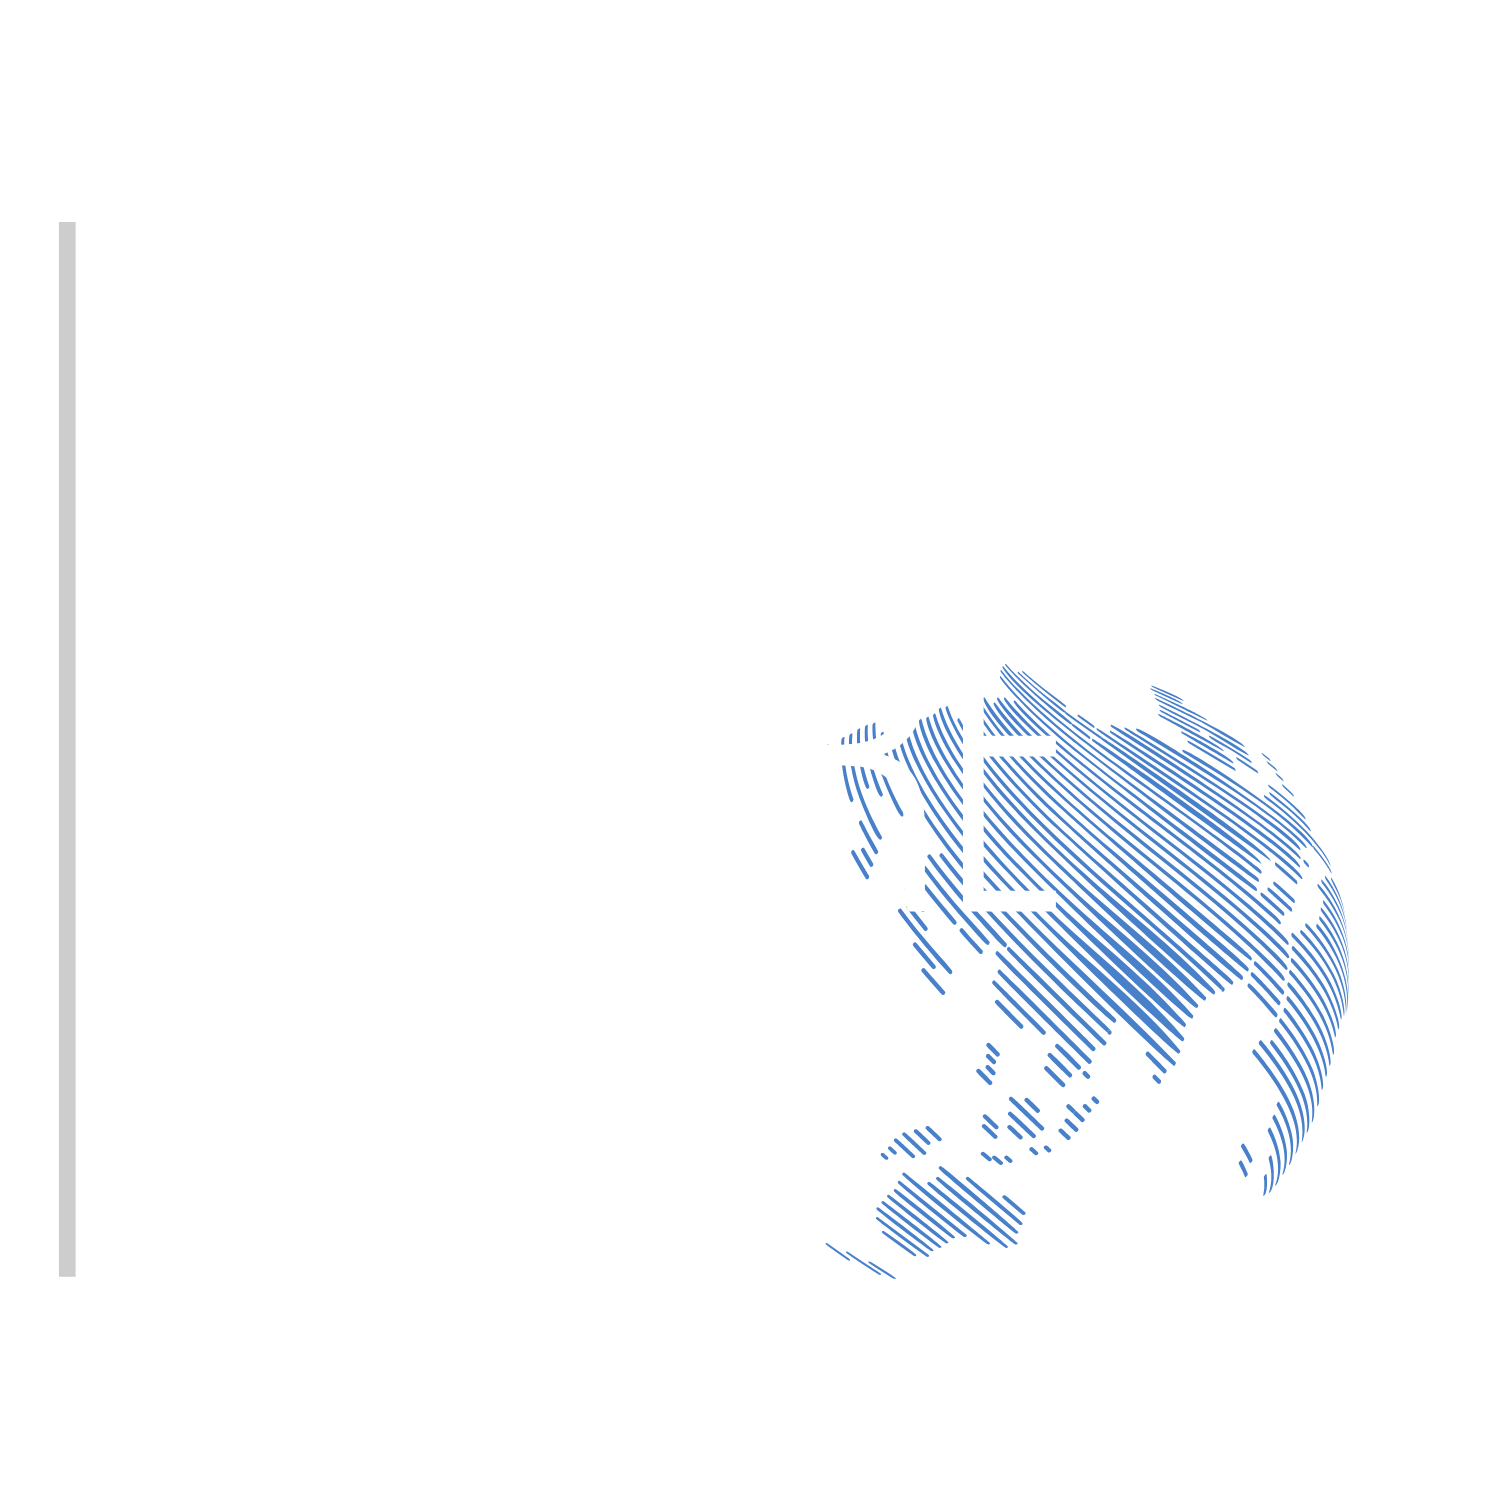 Portman Square Group